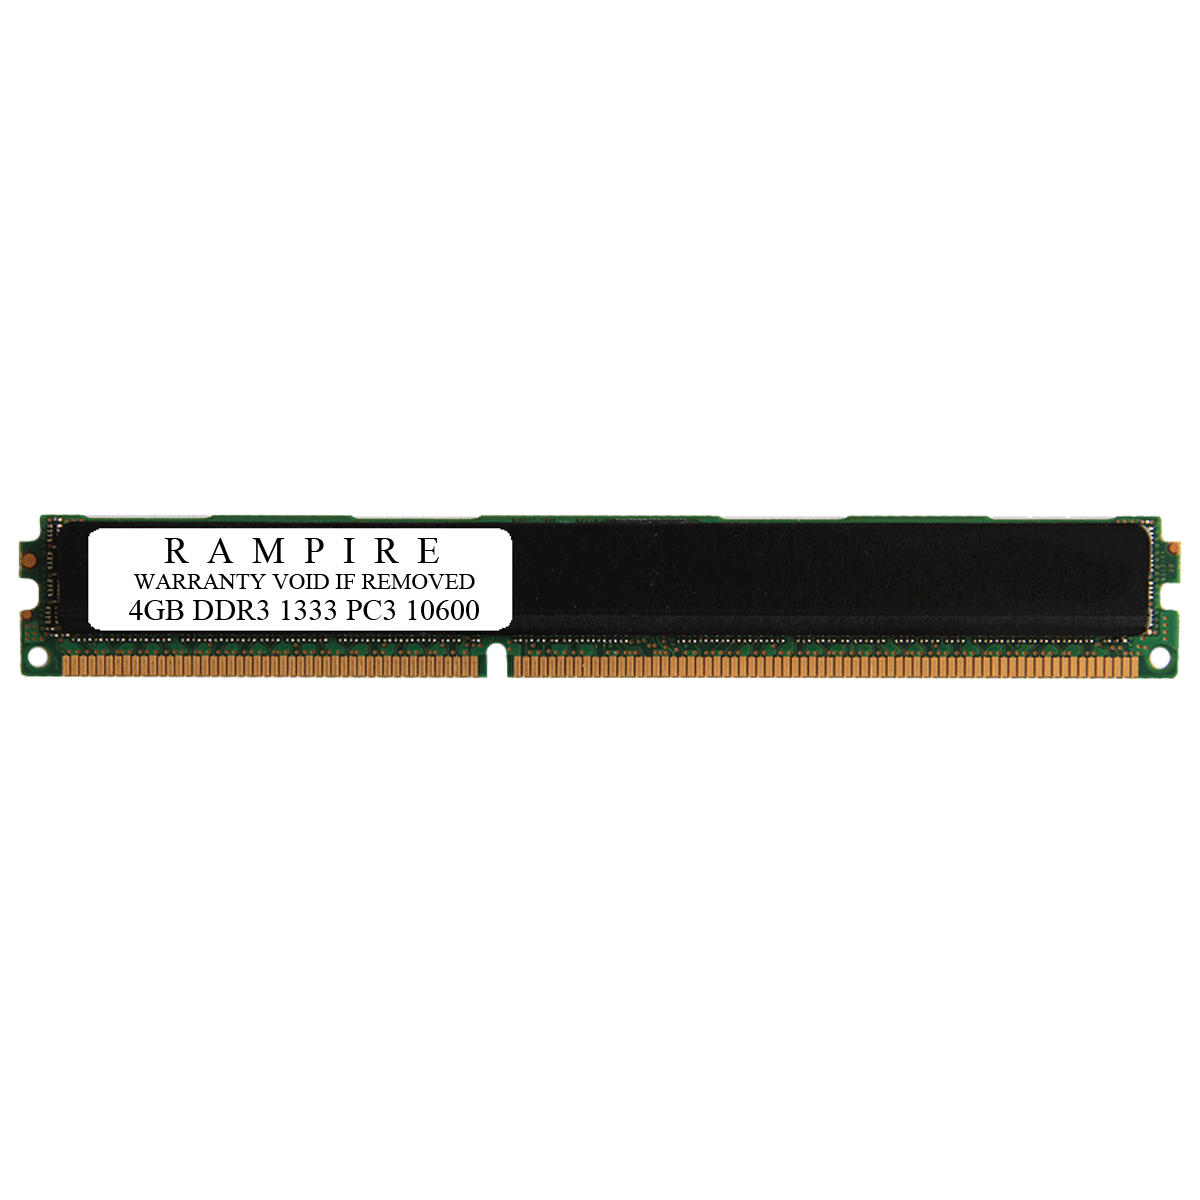 RAMPIRE 4GB DDR3 1333 (PC3 10600) 240-Pin SDRAM 2Rx8 VLP (Low Profile) 1.35V ECC Registered Server Memory